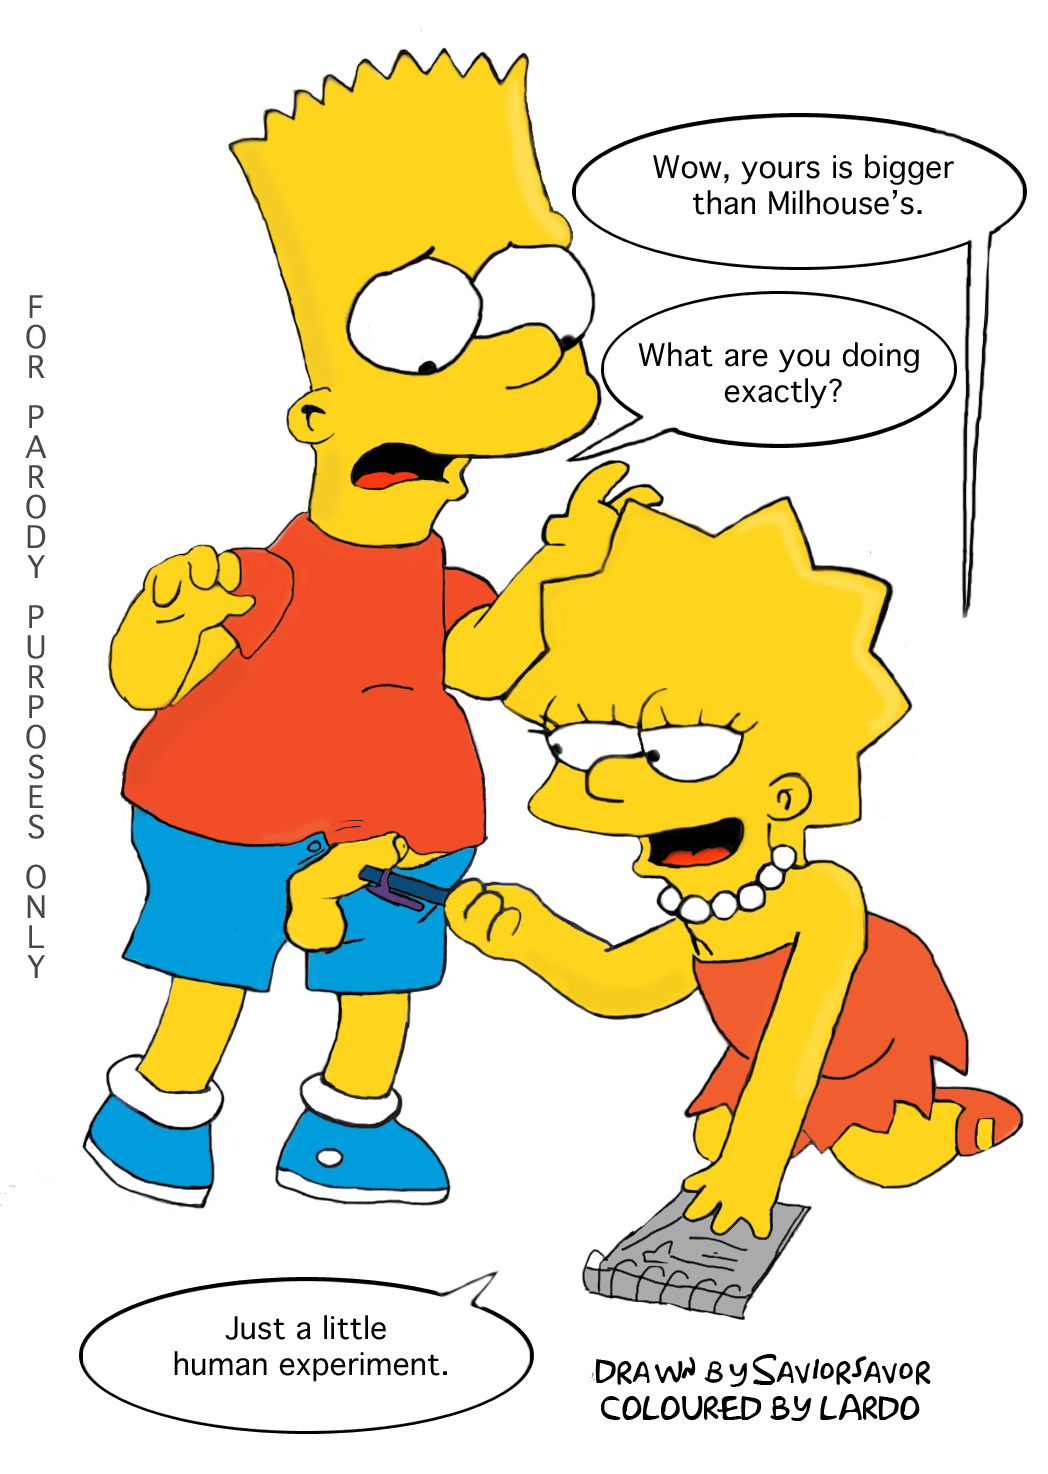 Bart And Lisa Having Sex